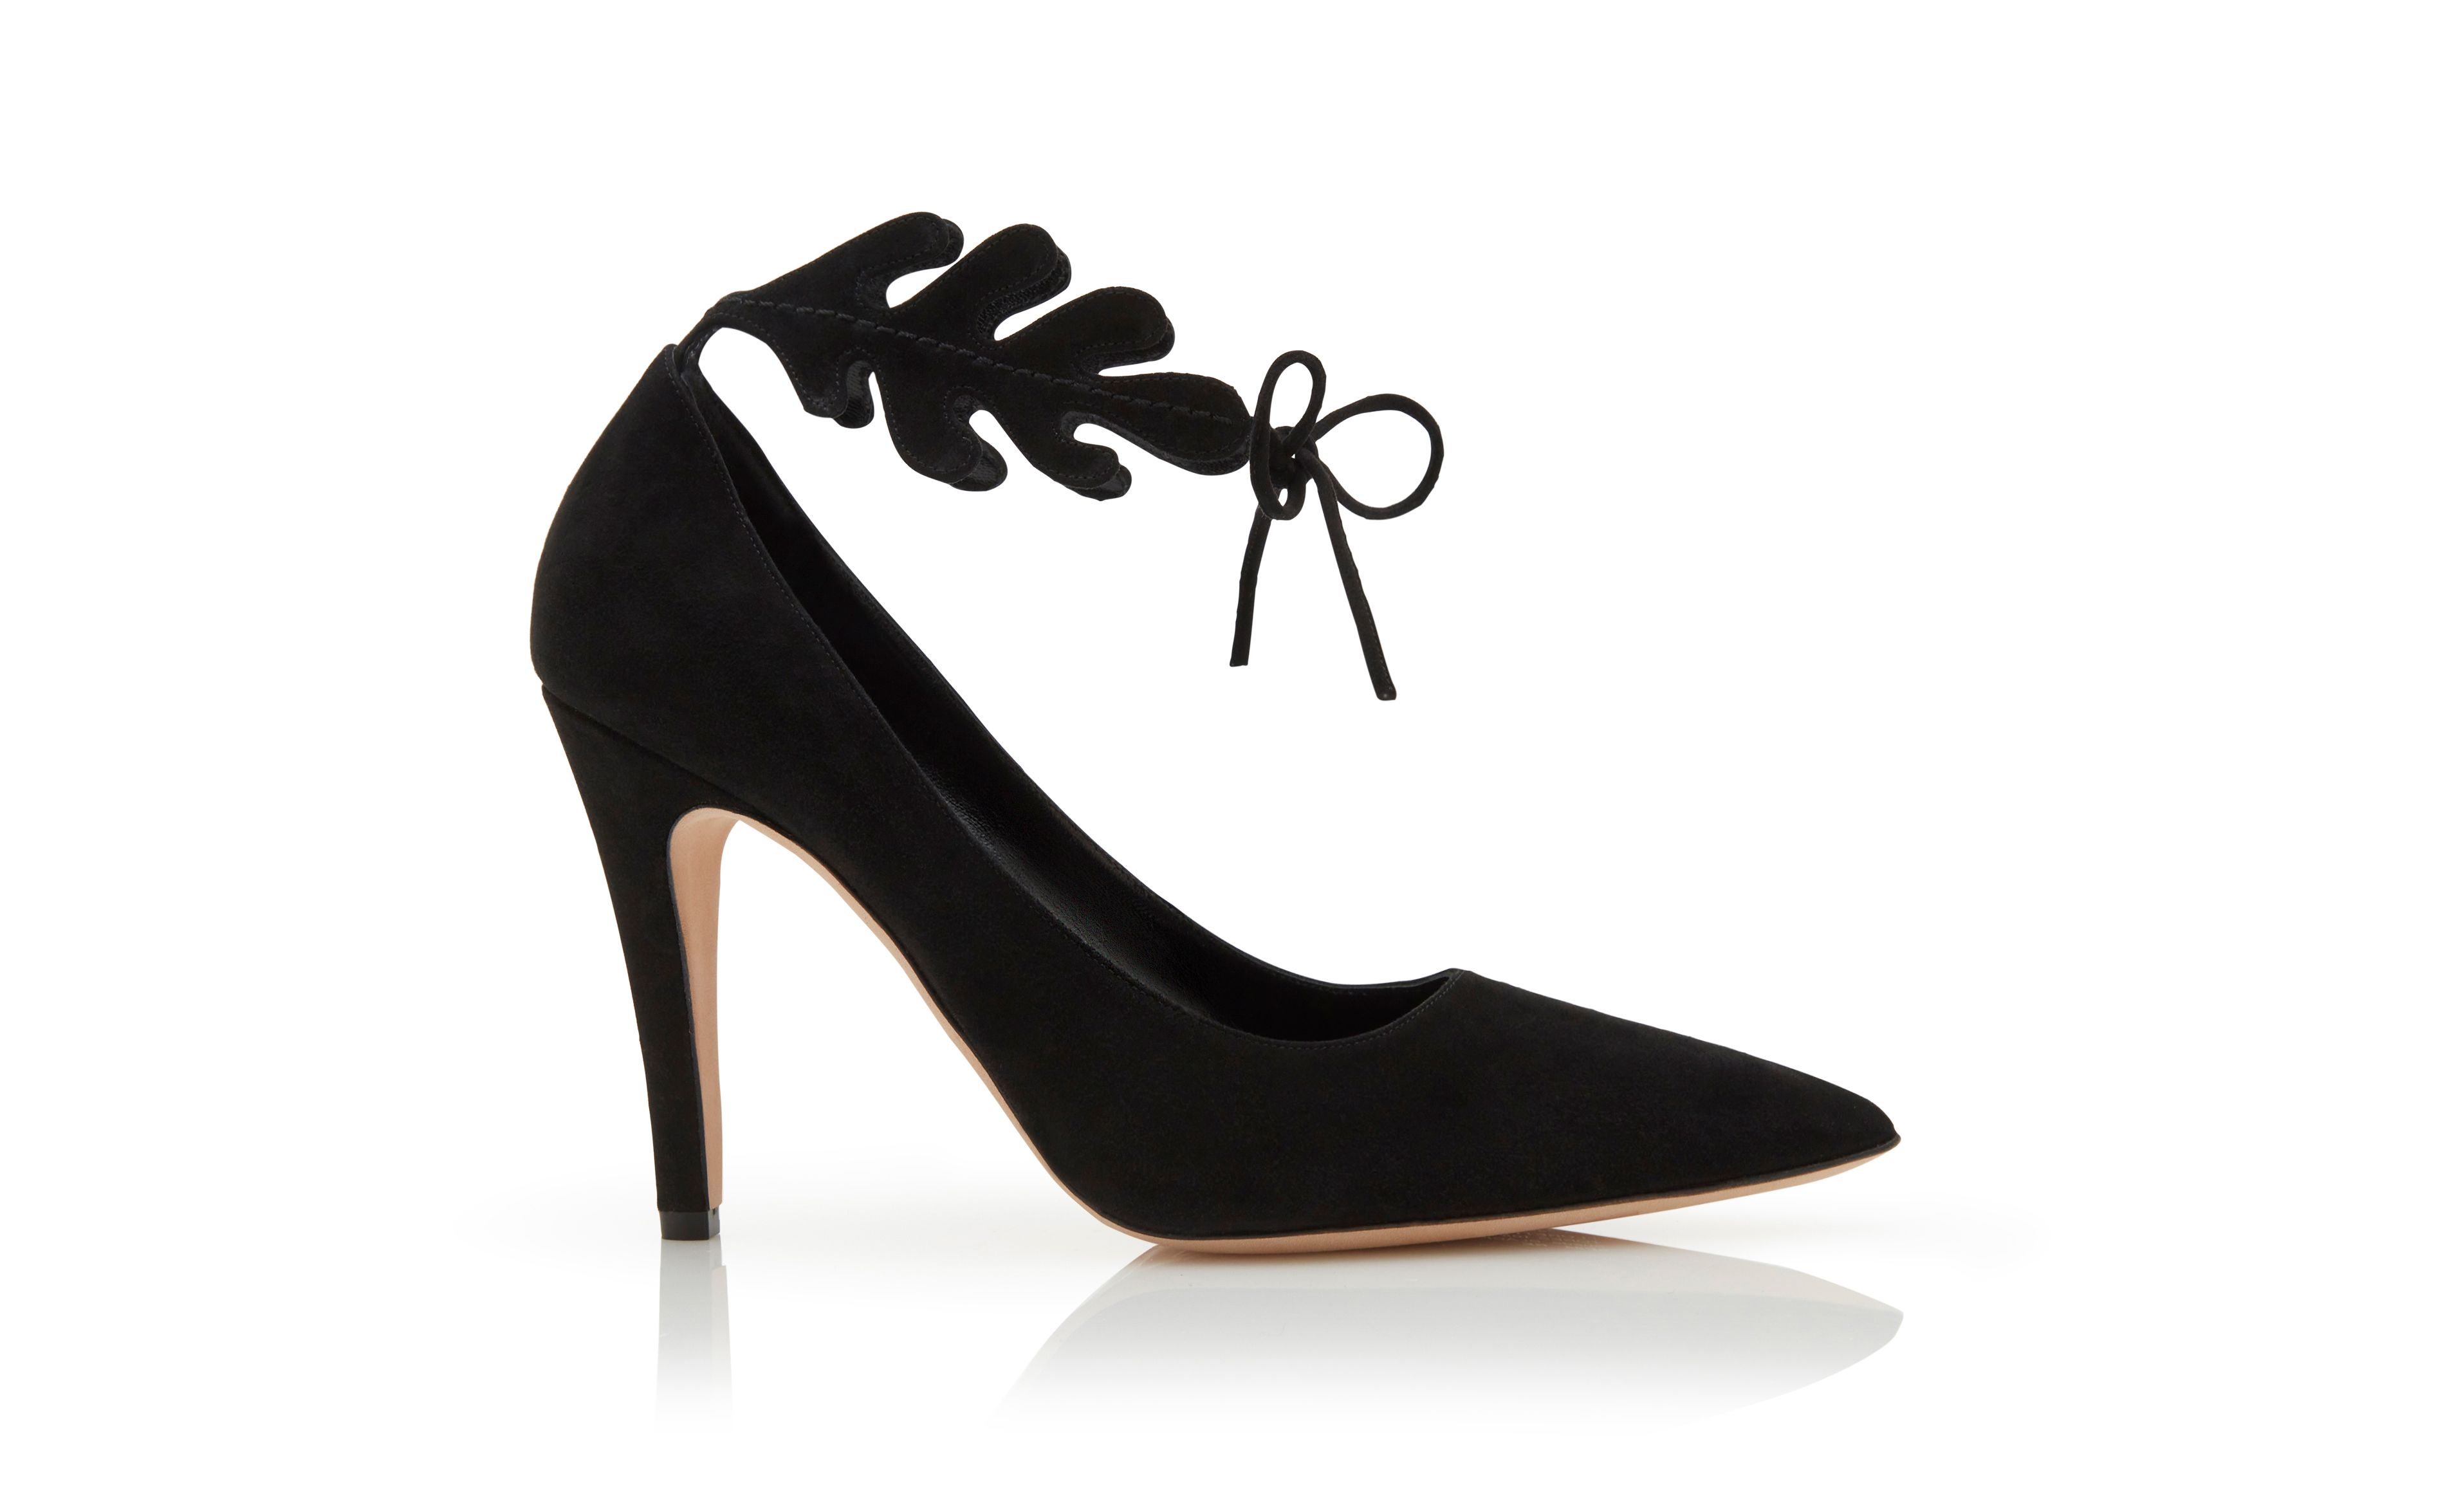 Ellarose Black Suede Ankle Strap Heels | Fashion heels, Ankle strap heels, Black  ankle strap heels